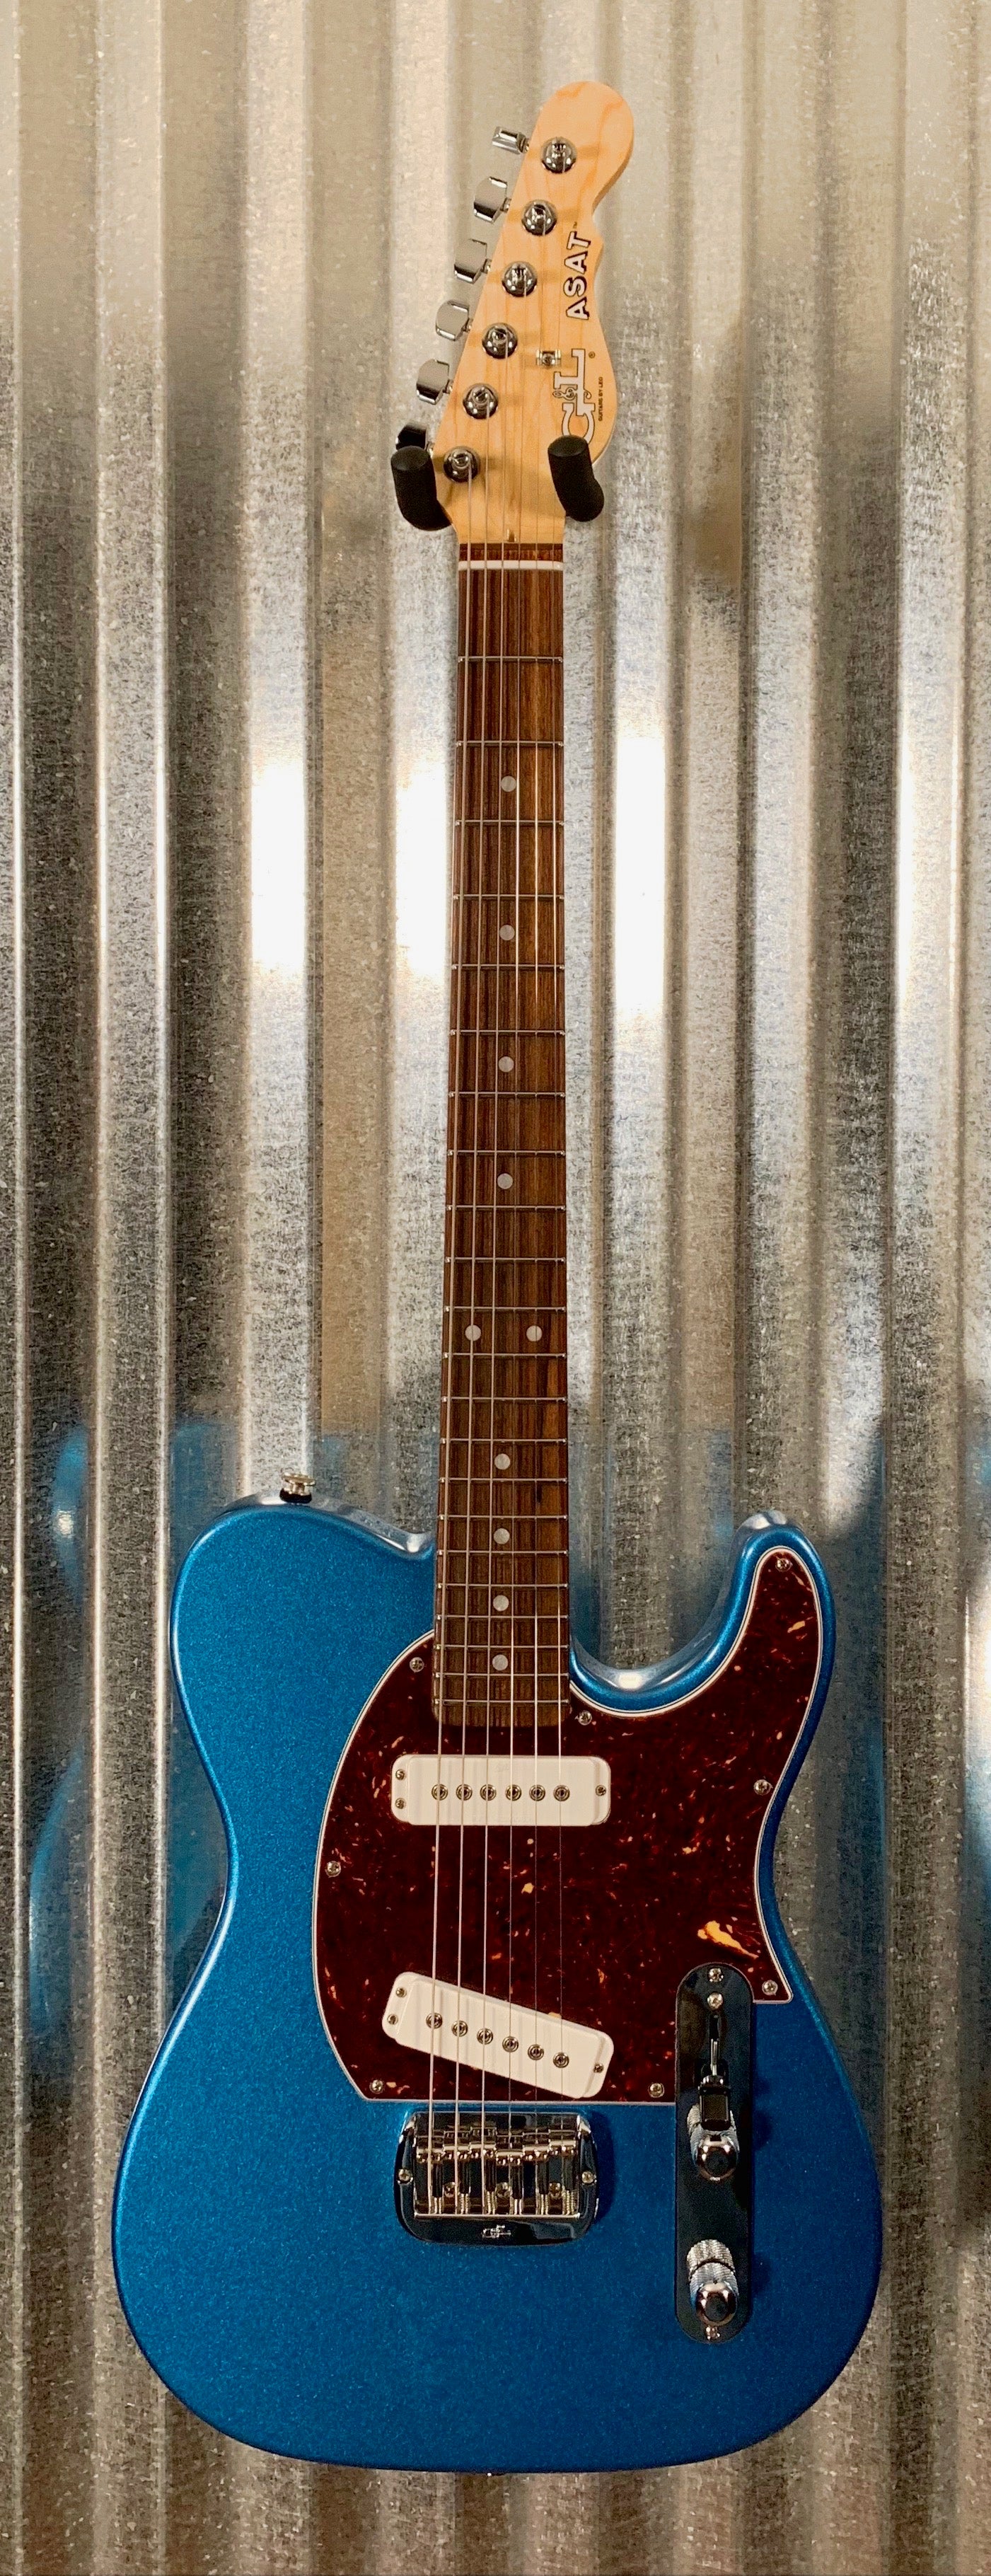 G&L Guitars USA Fullerton Deluxe ASAT Special Lake Placid Blue Guitar & Case 2019 #5106